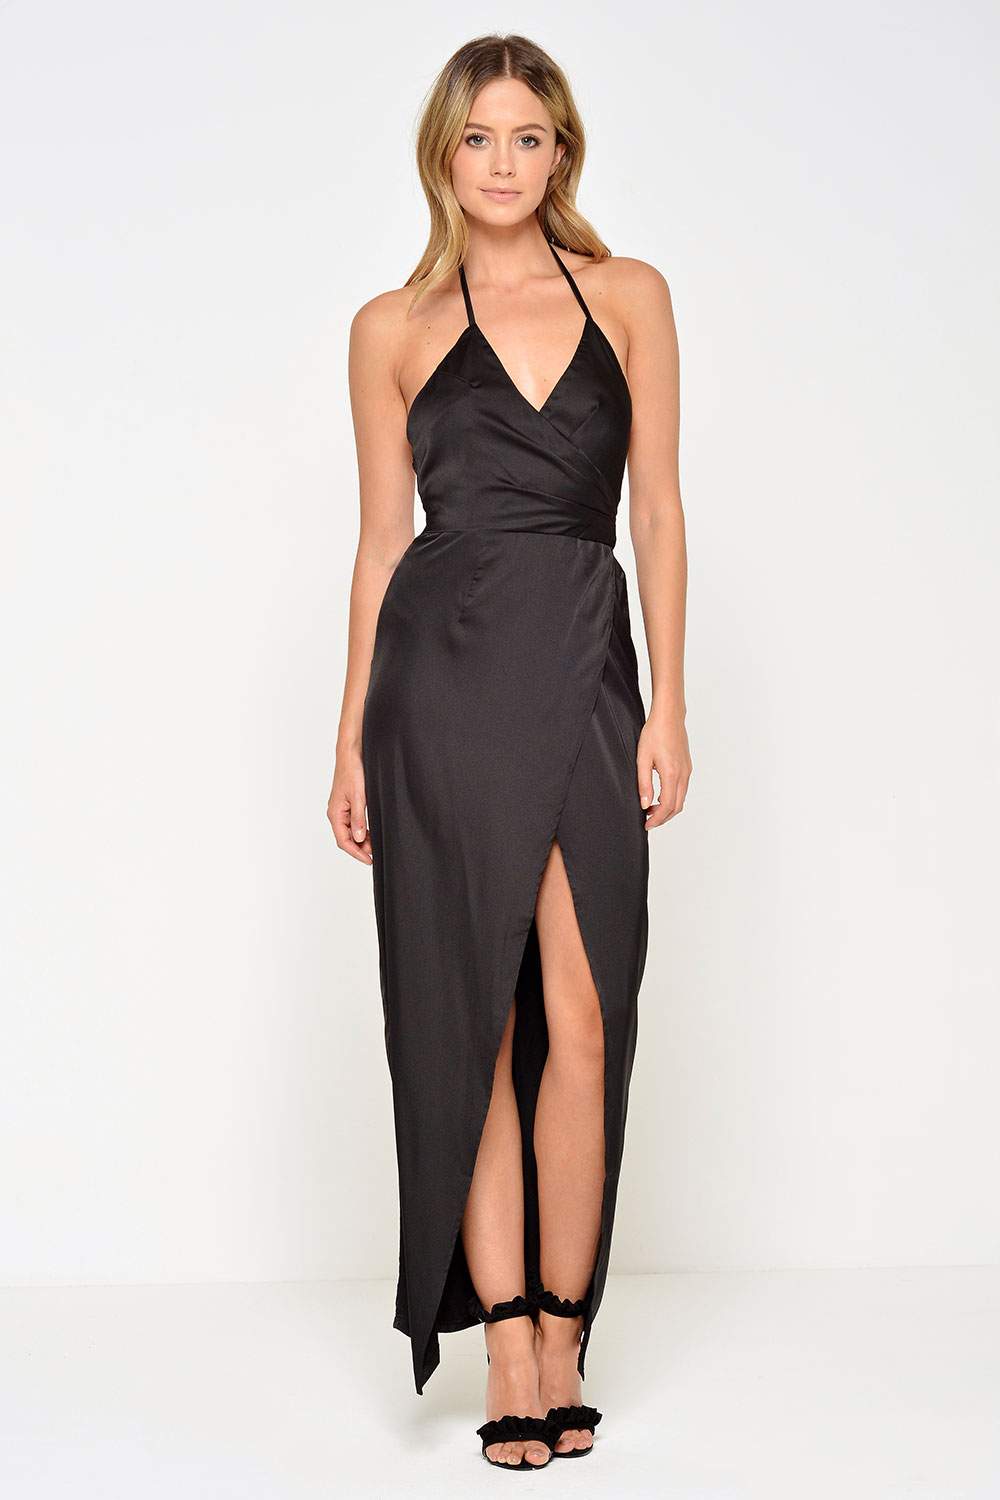 Stella Nadia Satin Wrap Maxi Dress in Black | iCLOTHING - iCLOTHING